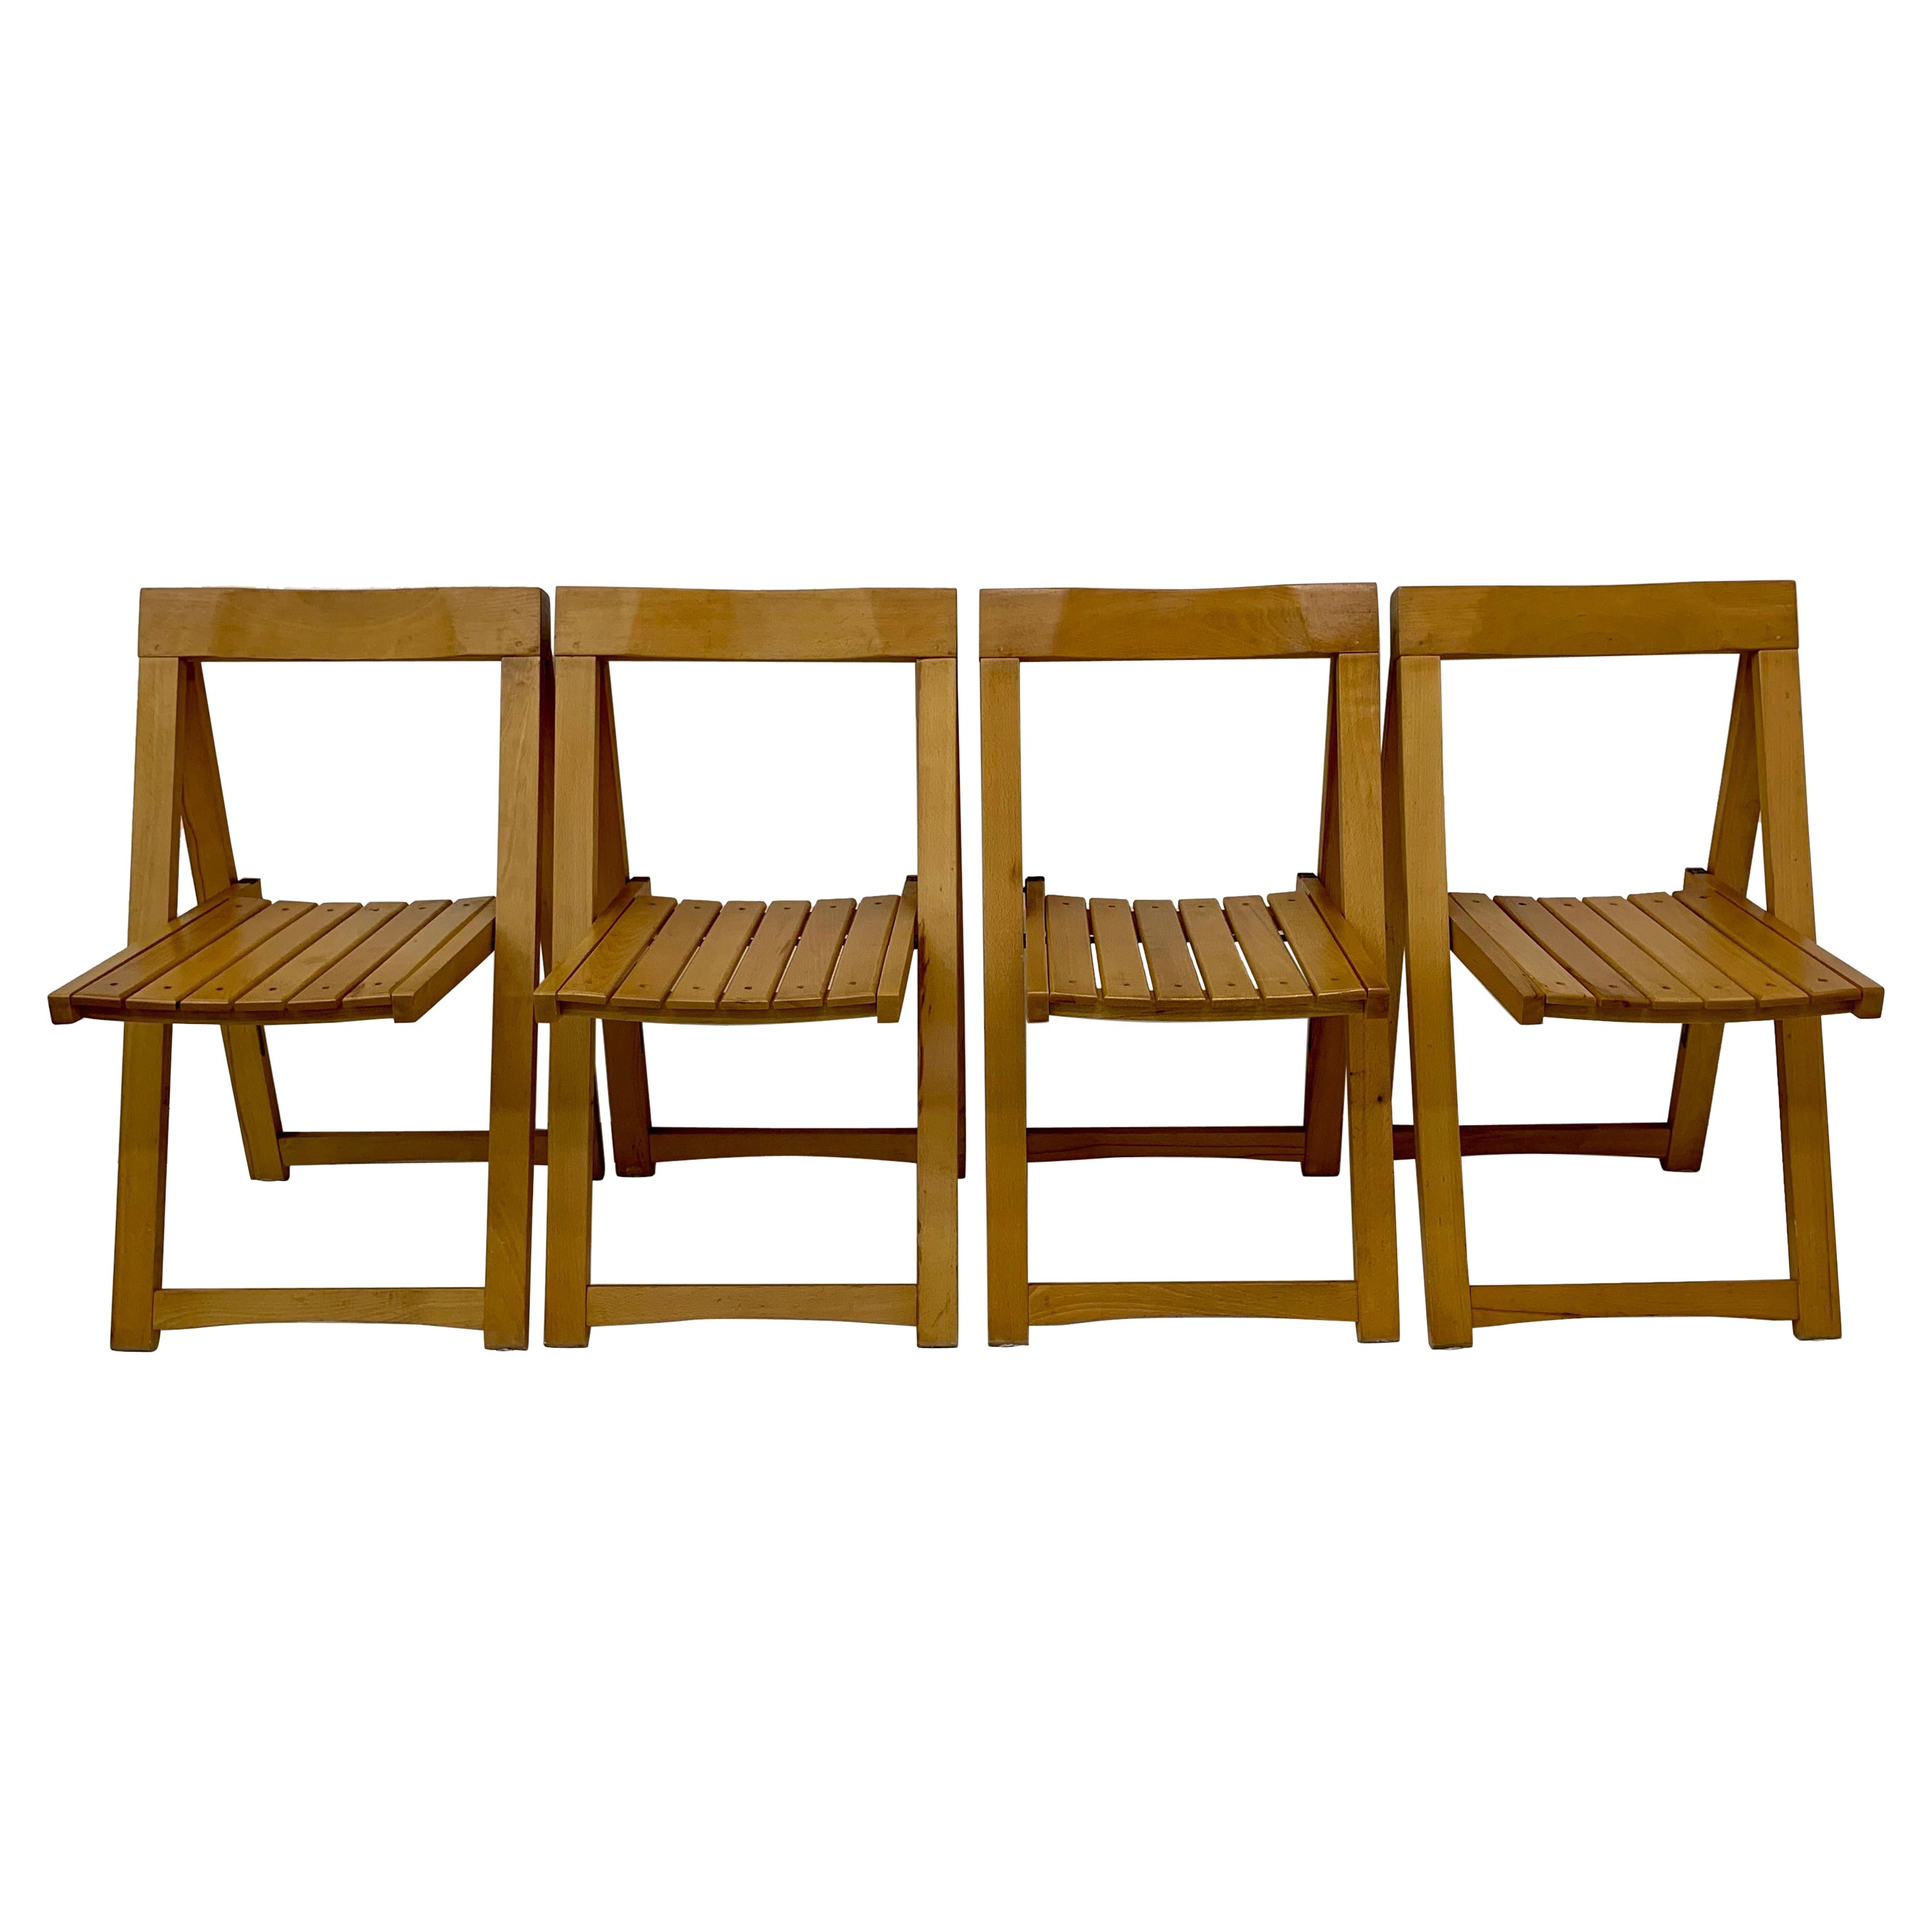 Set of 4 Aldo Jacober for Alberto Bazzani folding chairs, 1960’s